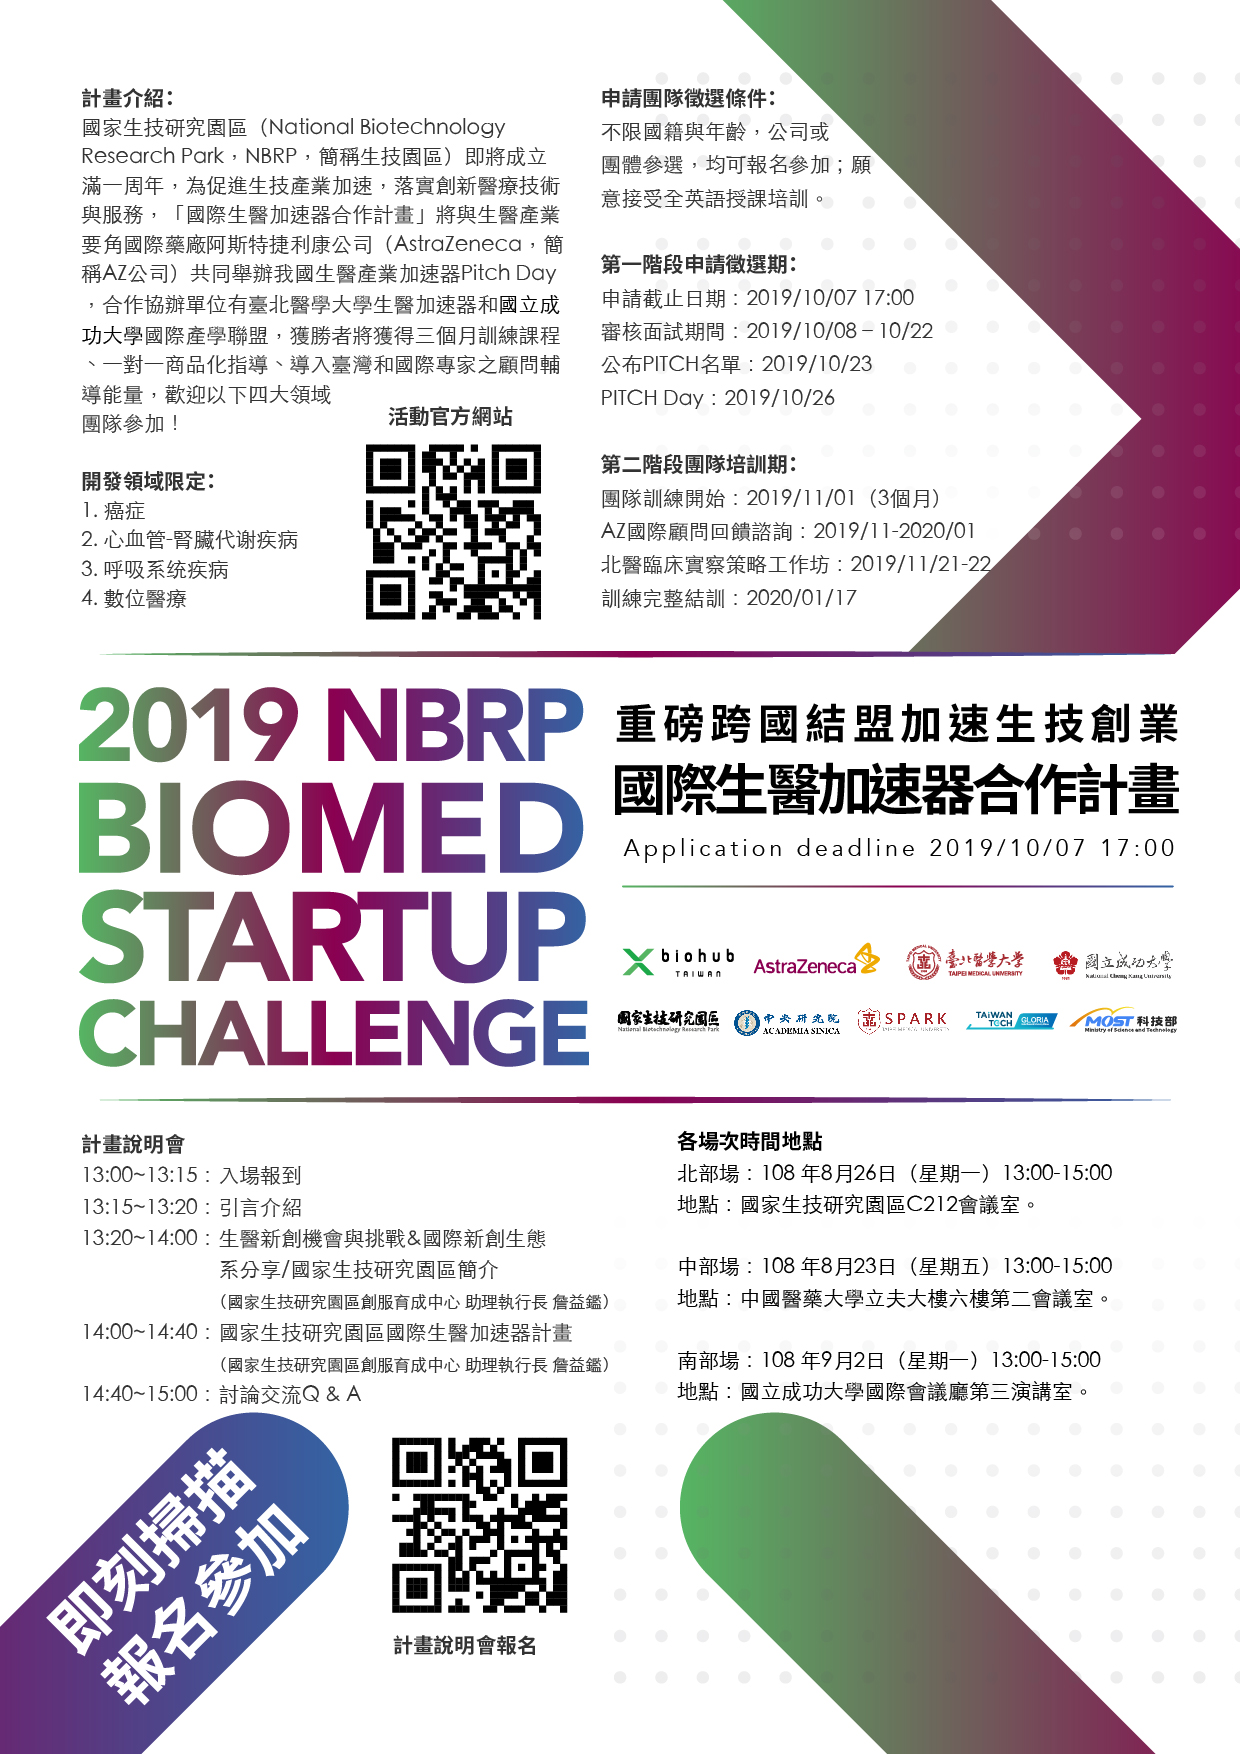 【敬邀參加】2019 NBRP BioMed Start-up Challenge國際生醫加速器合作計畫